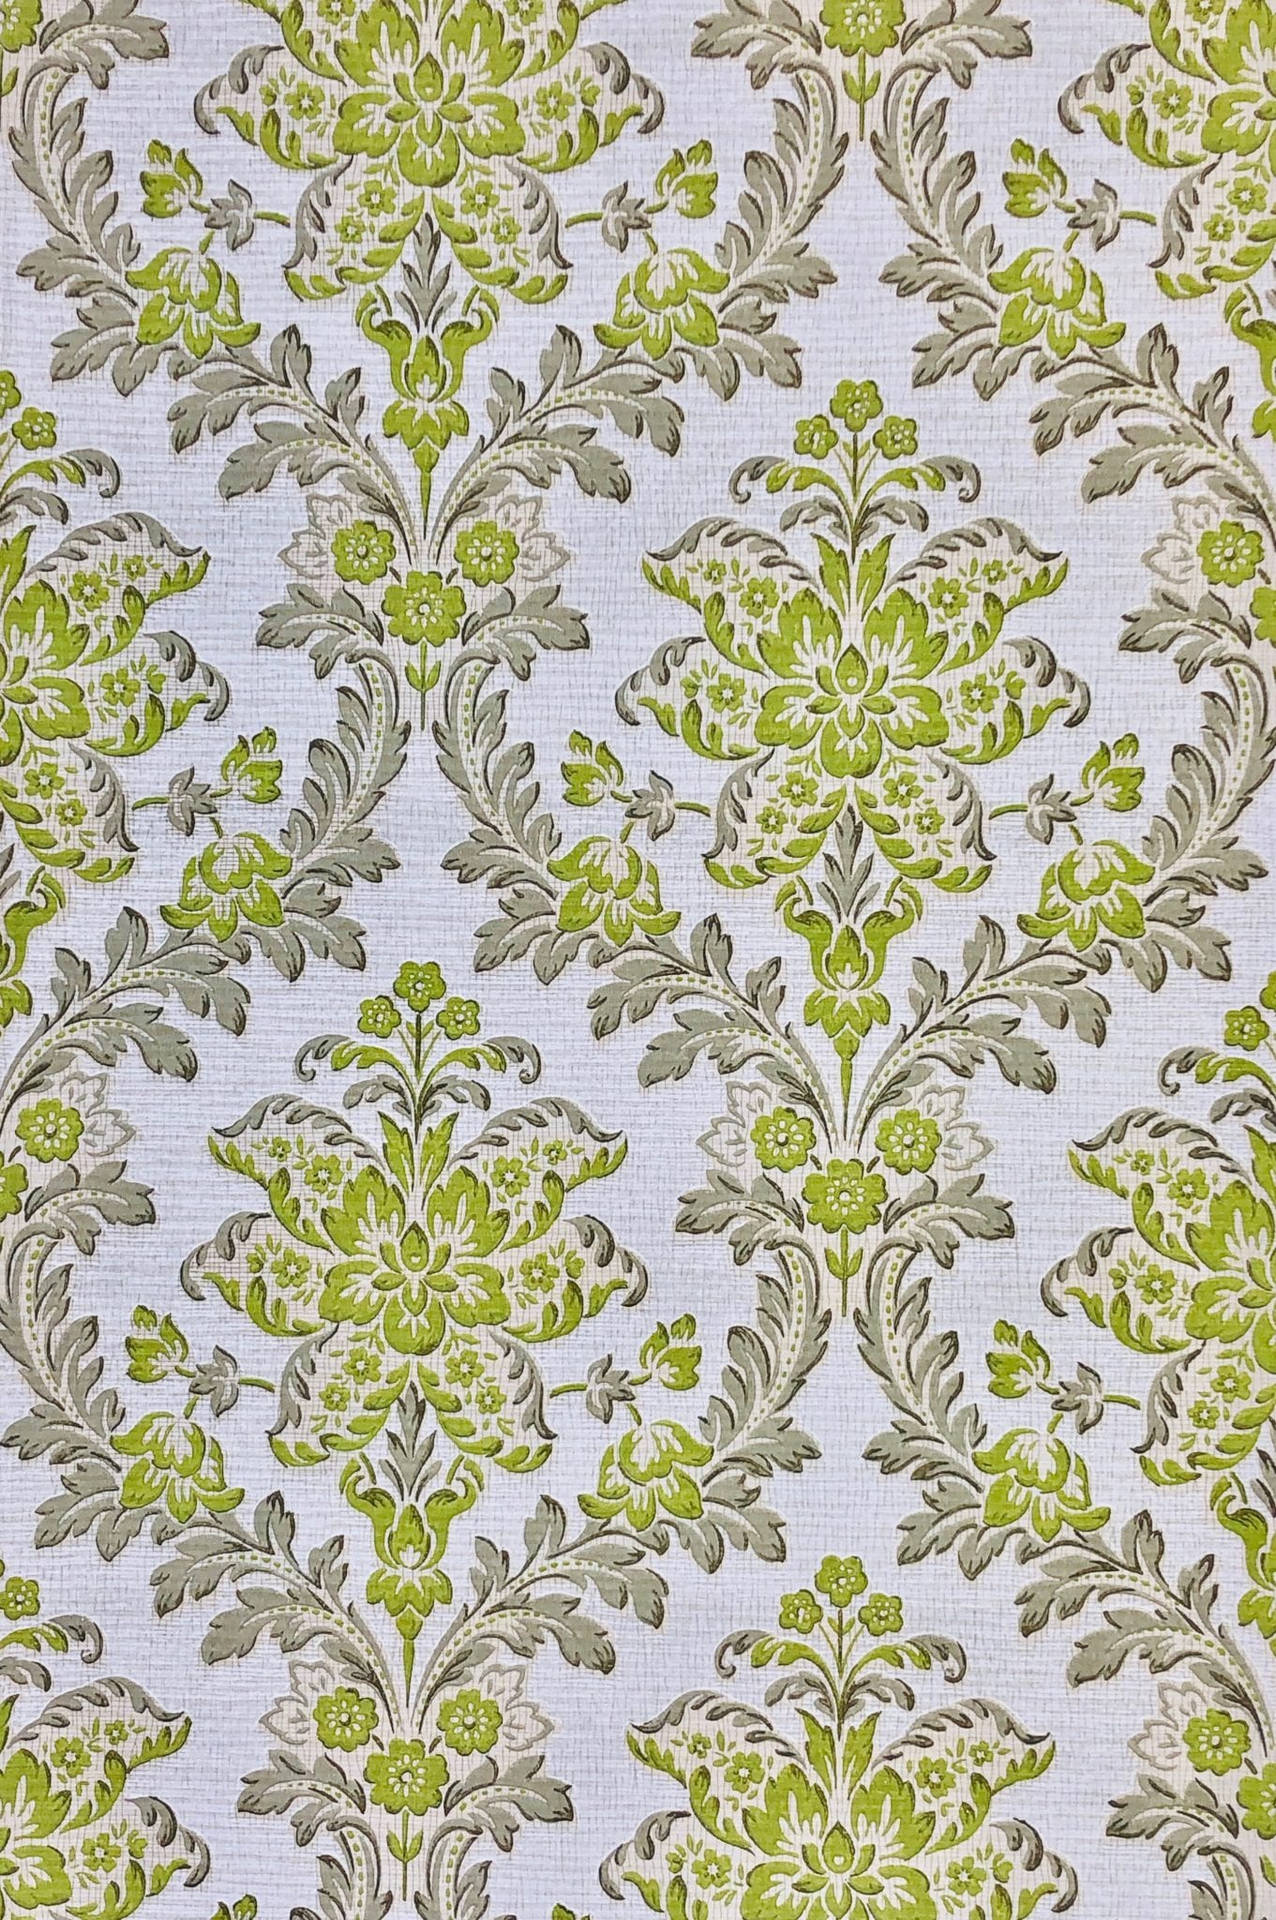 Green Floral Textured Fabric Wallpaper